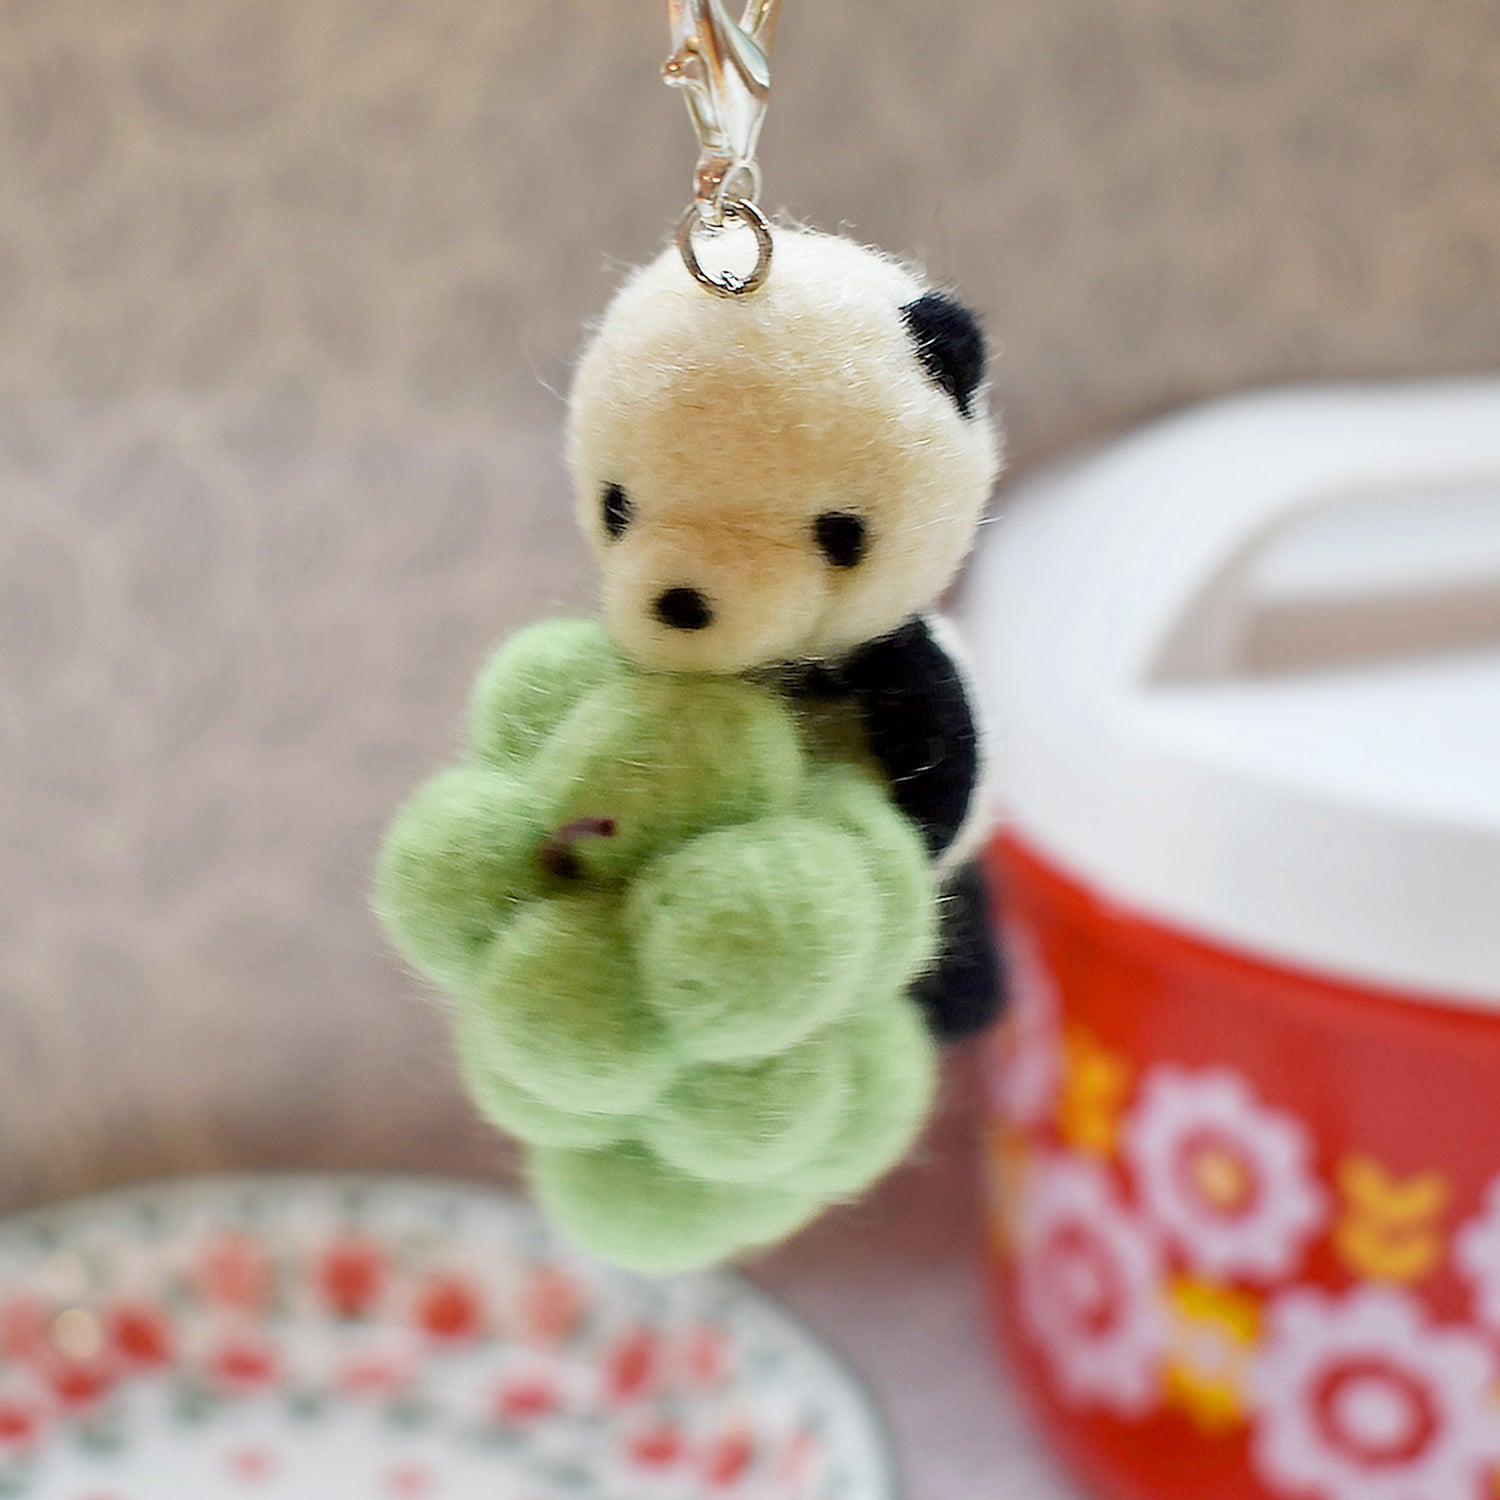 Bell-Panda Japanese Cute Handmade Needle Felted Keycharm Panda Holding a Muscat Grapes RARE FIND ZAKKA